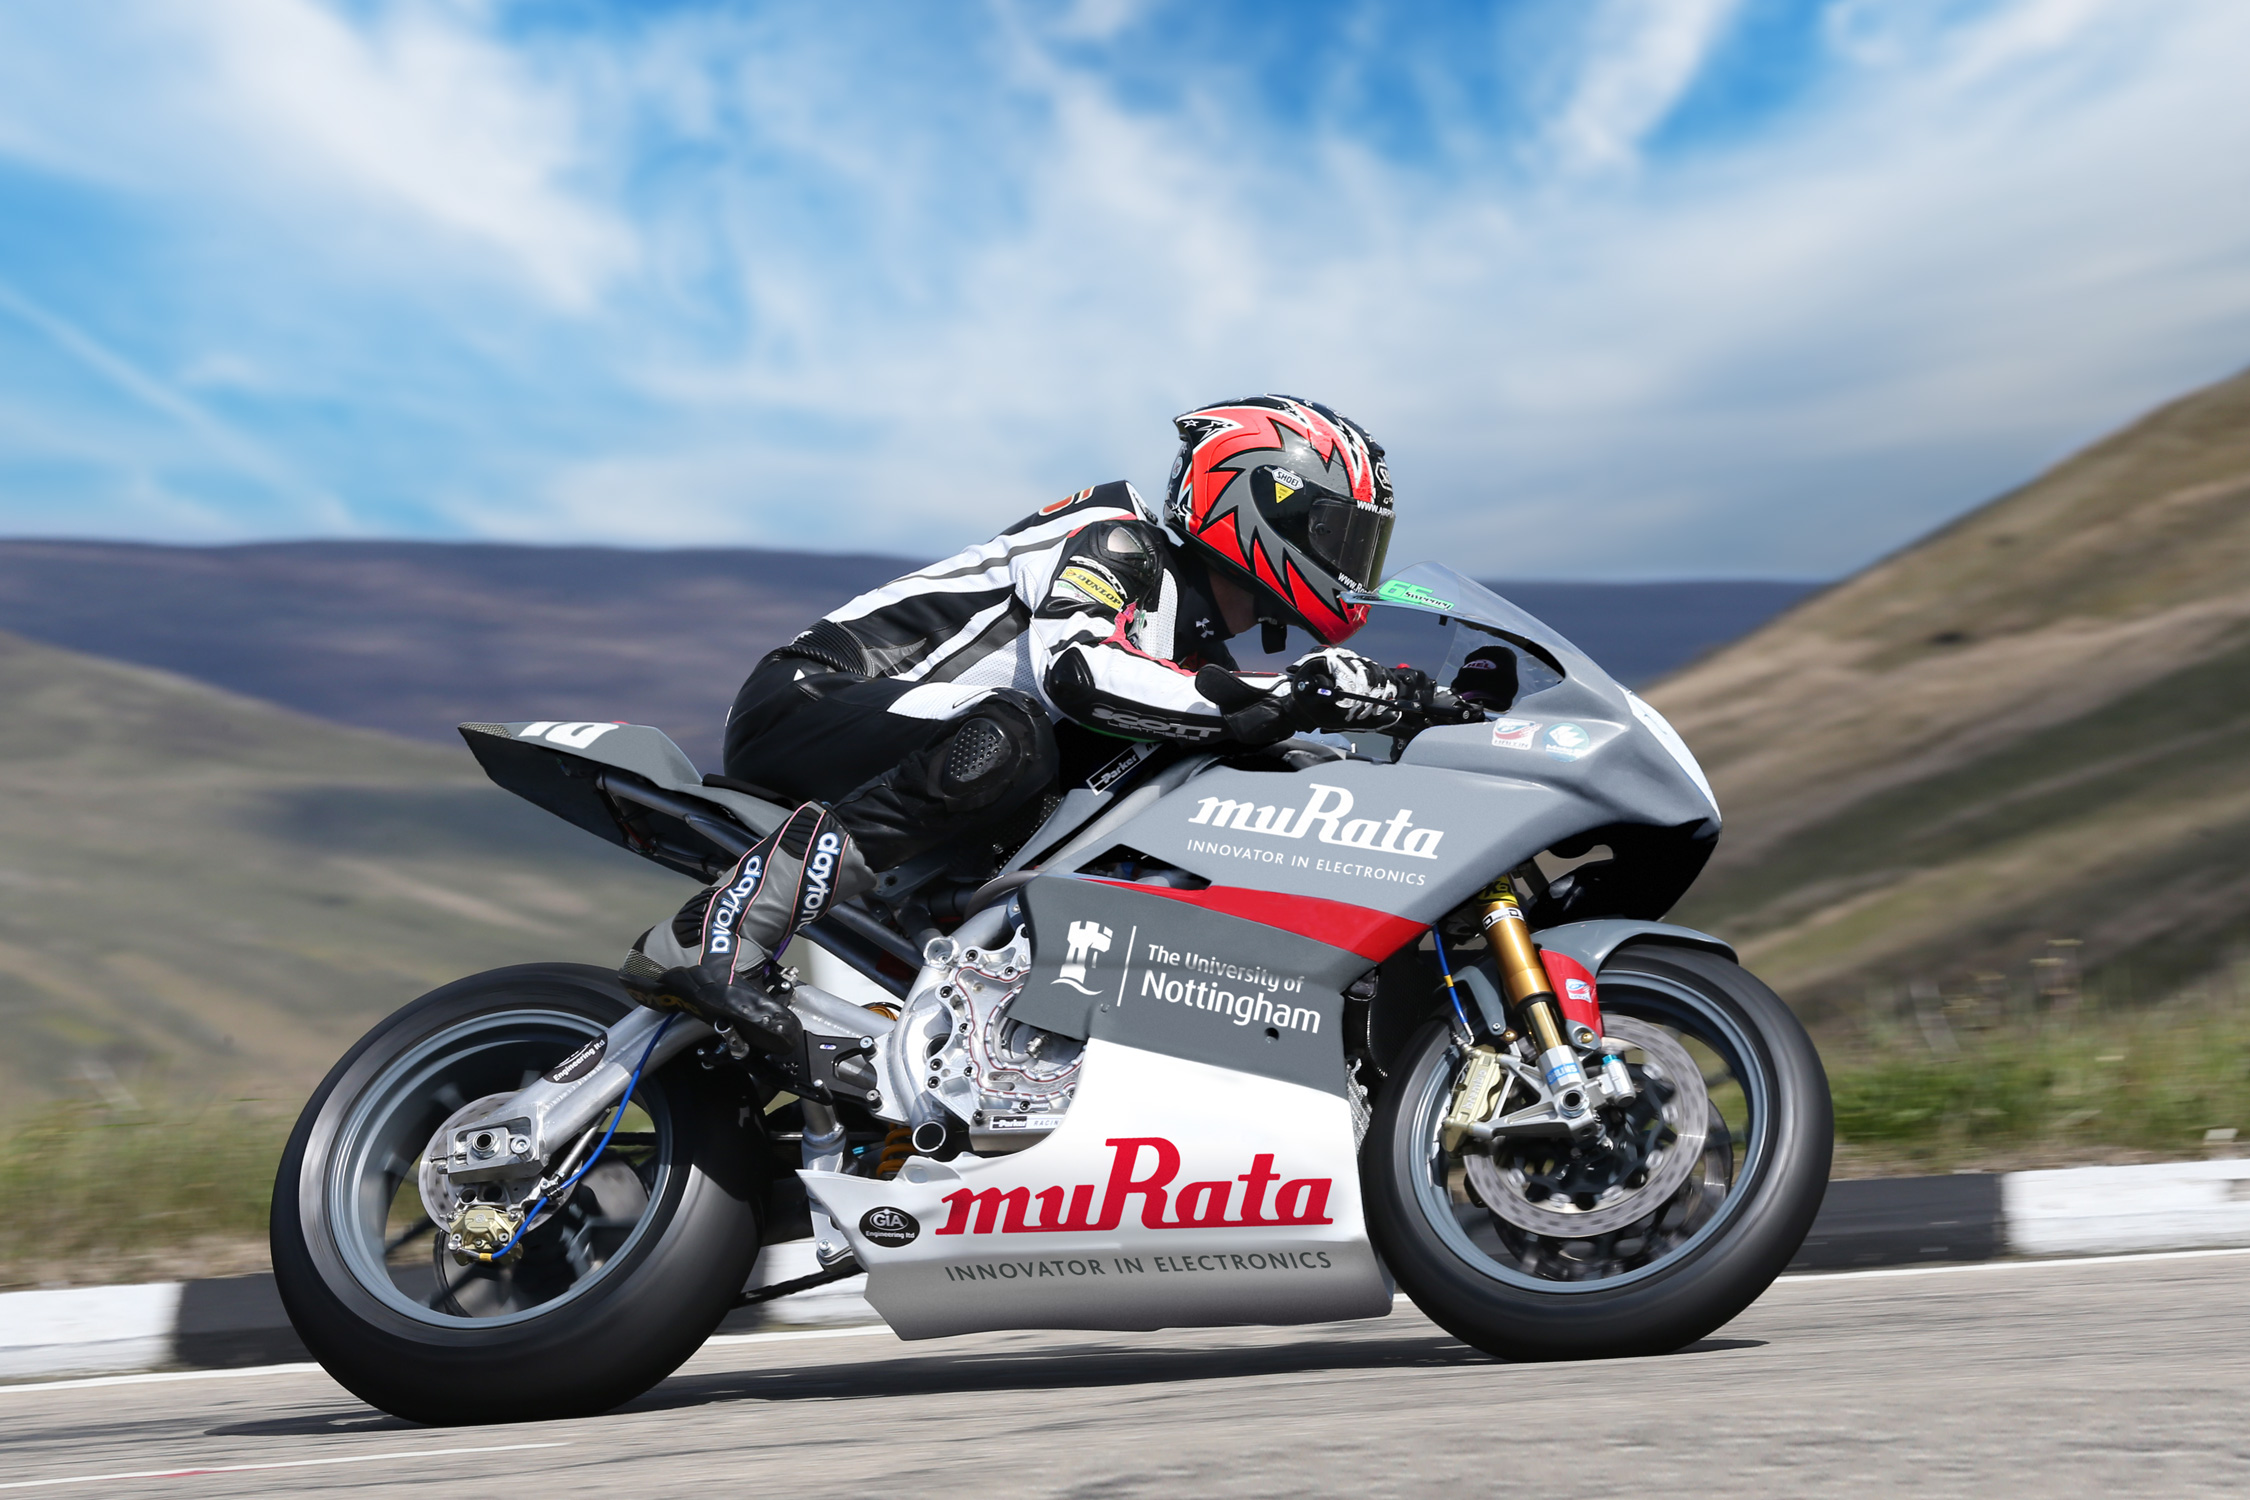 Murata sponsored Nottingham University electric motorbike